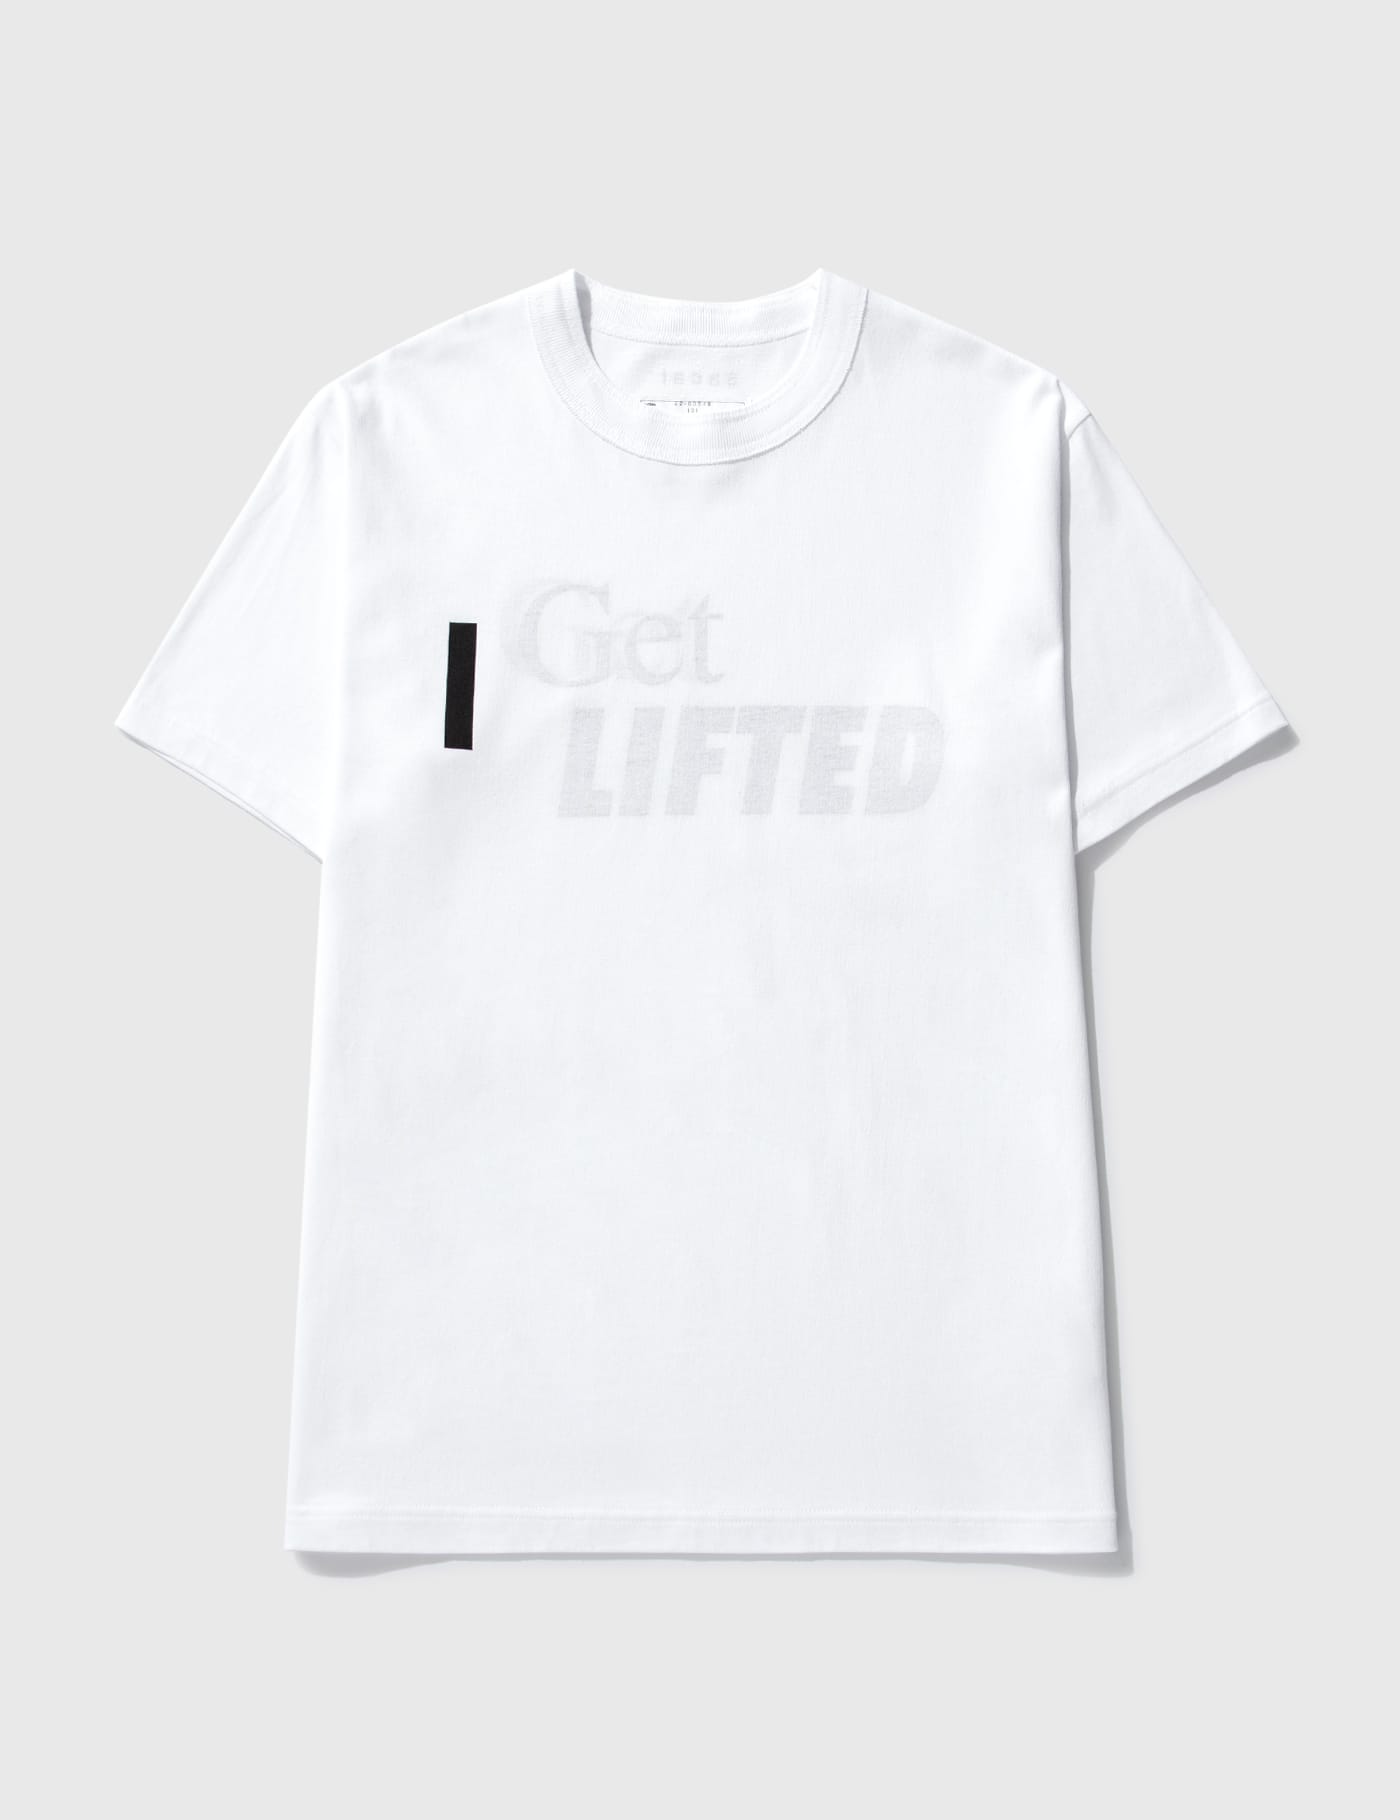 I Get LIFTED L/S T-Shirt sacai ブラック サイズ1NIKE